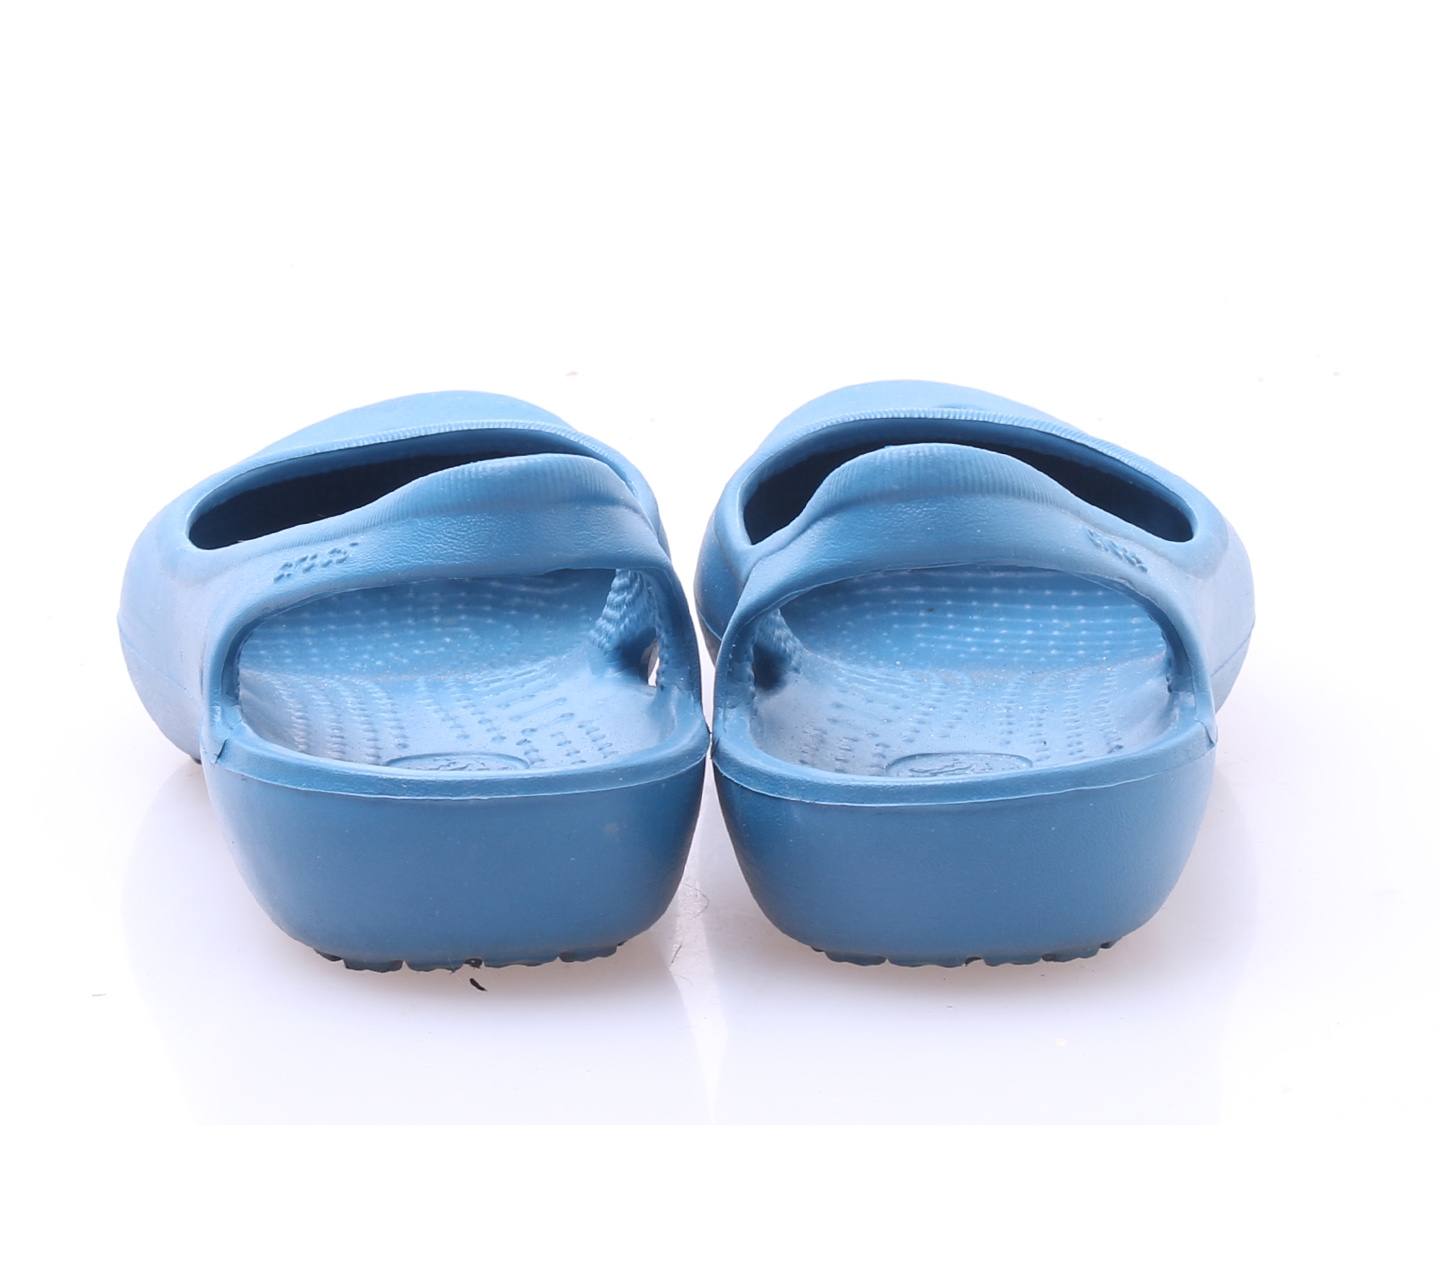 Crocs Dark Blue Sandals